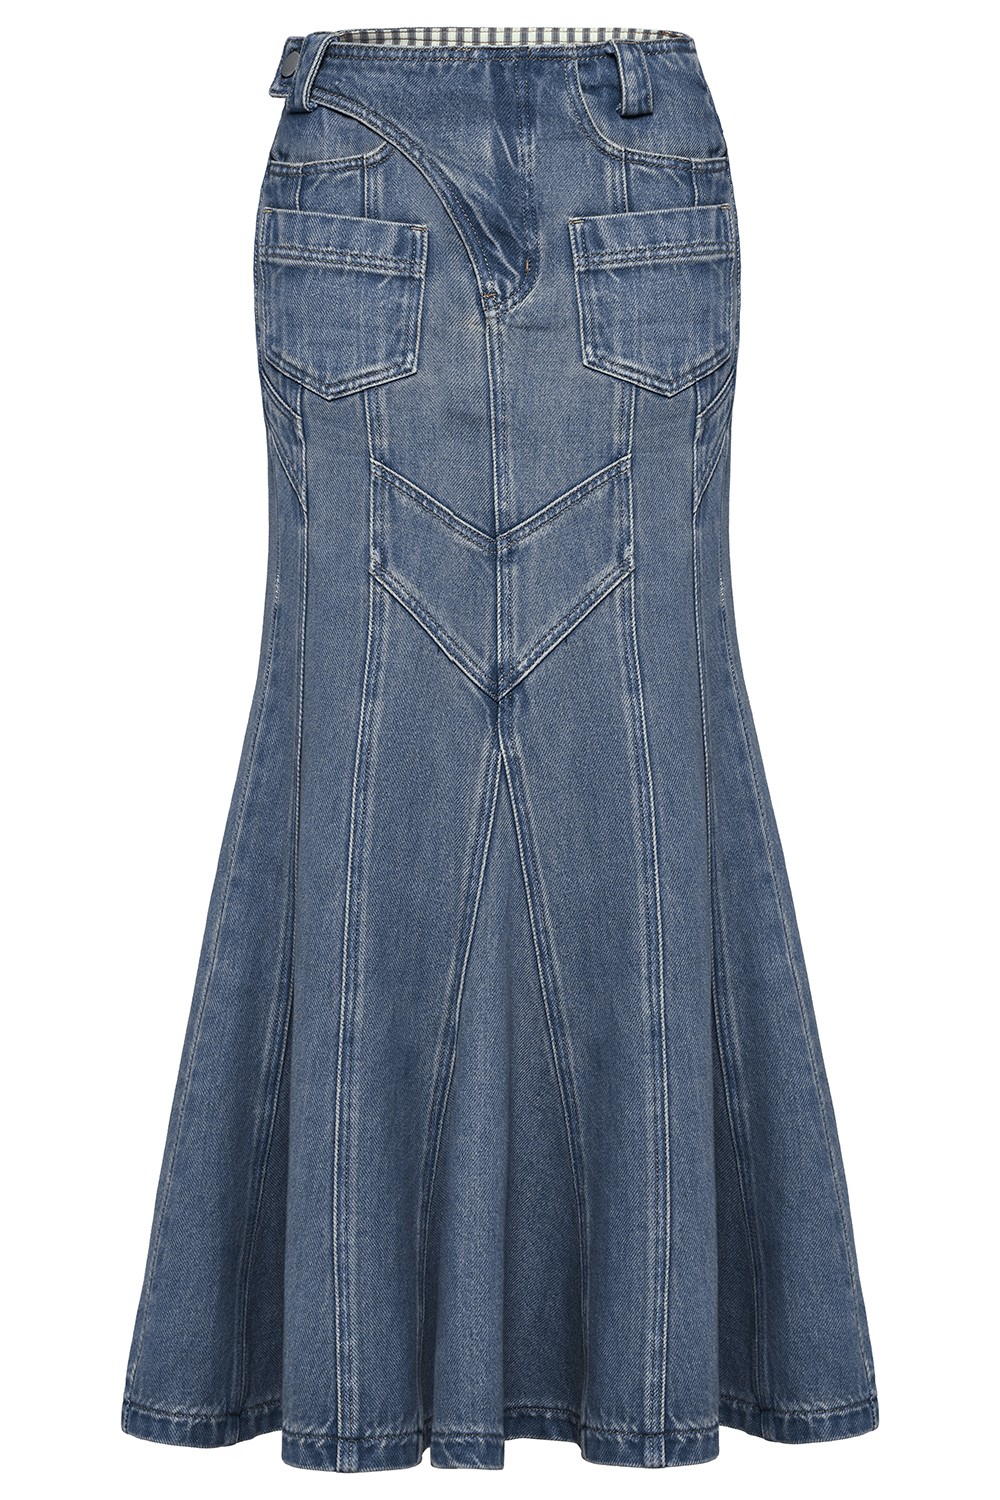 Buy MADAME Denim Regular Fit Women's Mid Rise Casual Skirt | Shoppers Stop